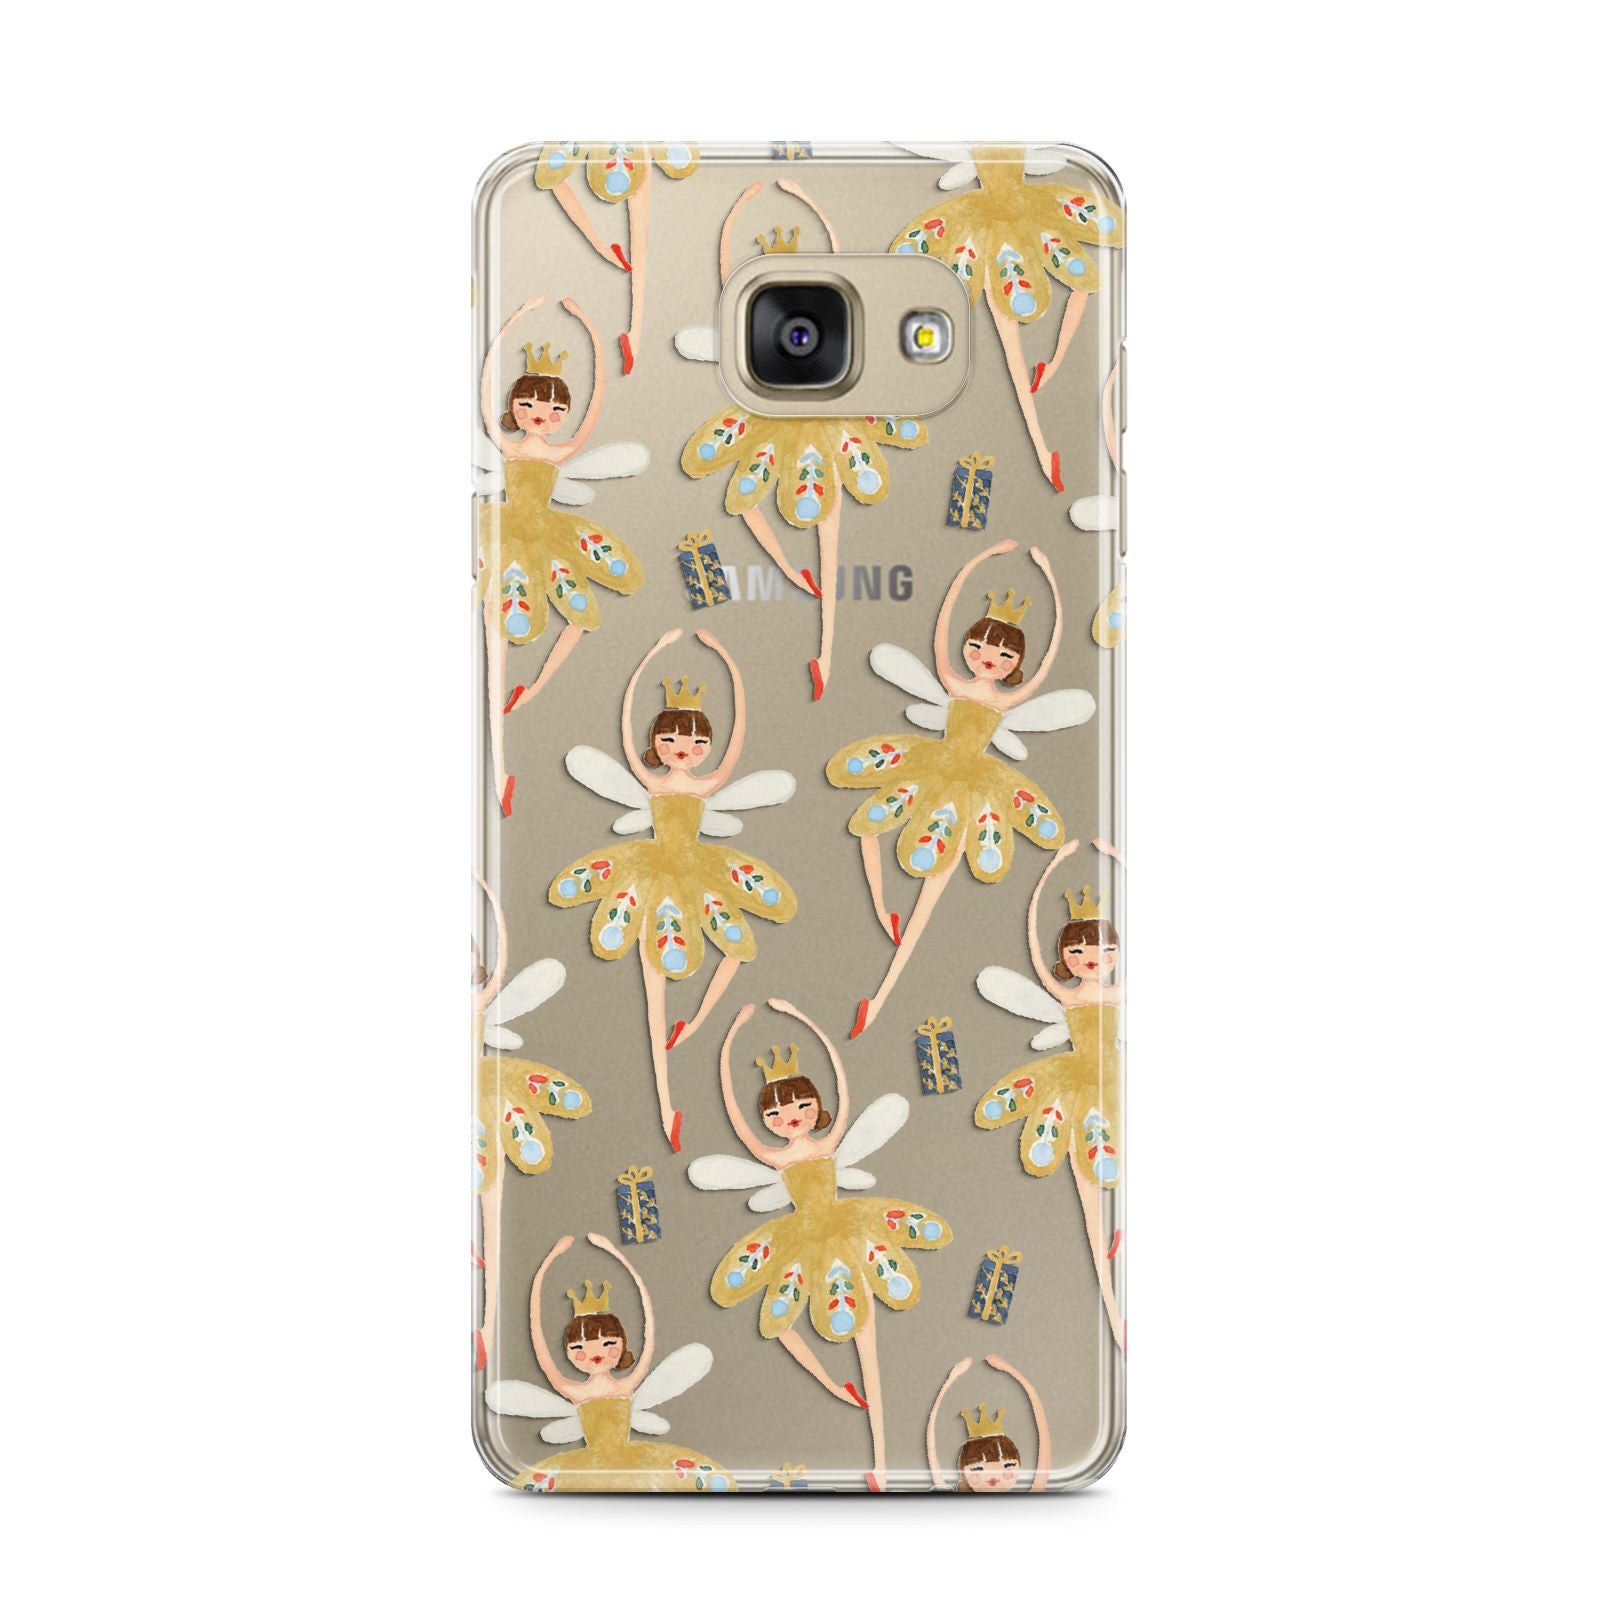 Dancing ballerina princess Samsung Galaxy A7 2016 Case on gold phone